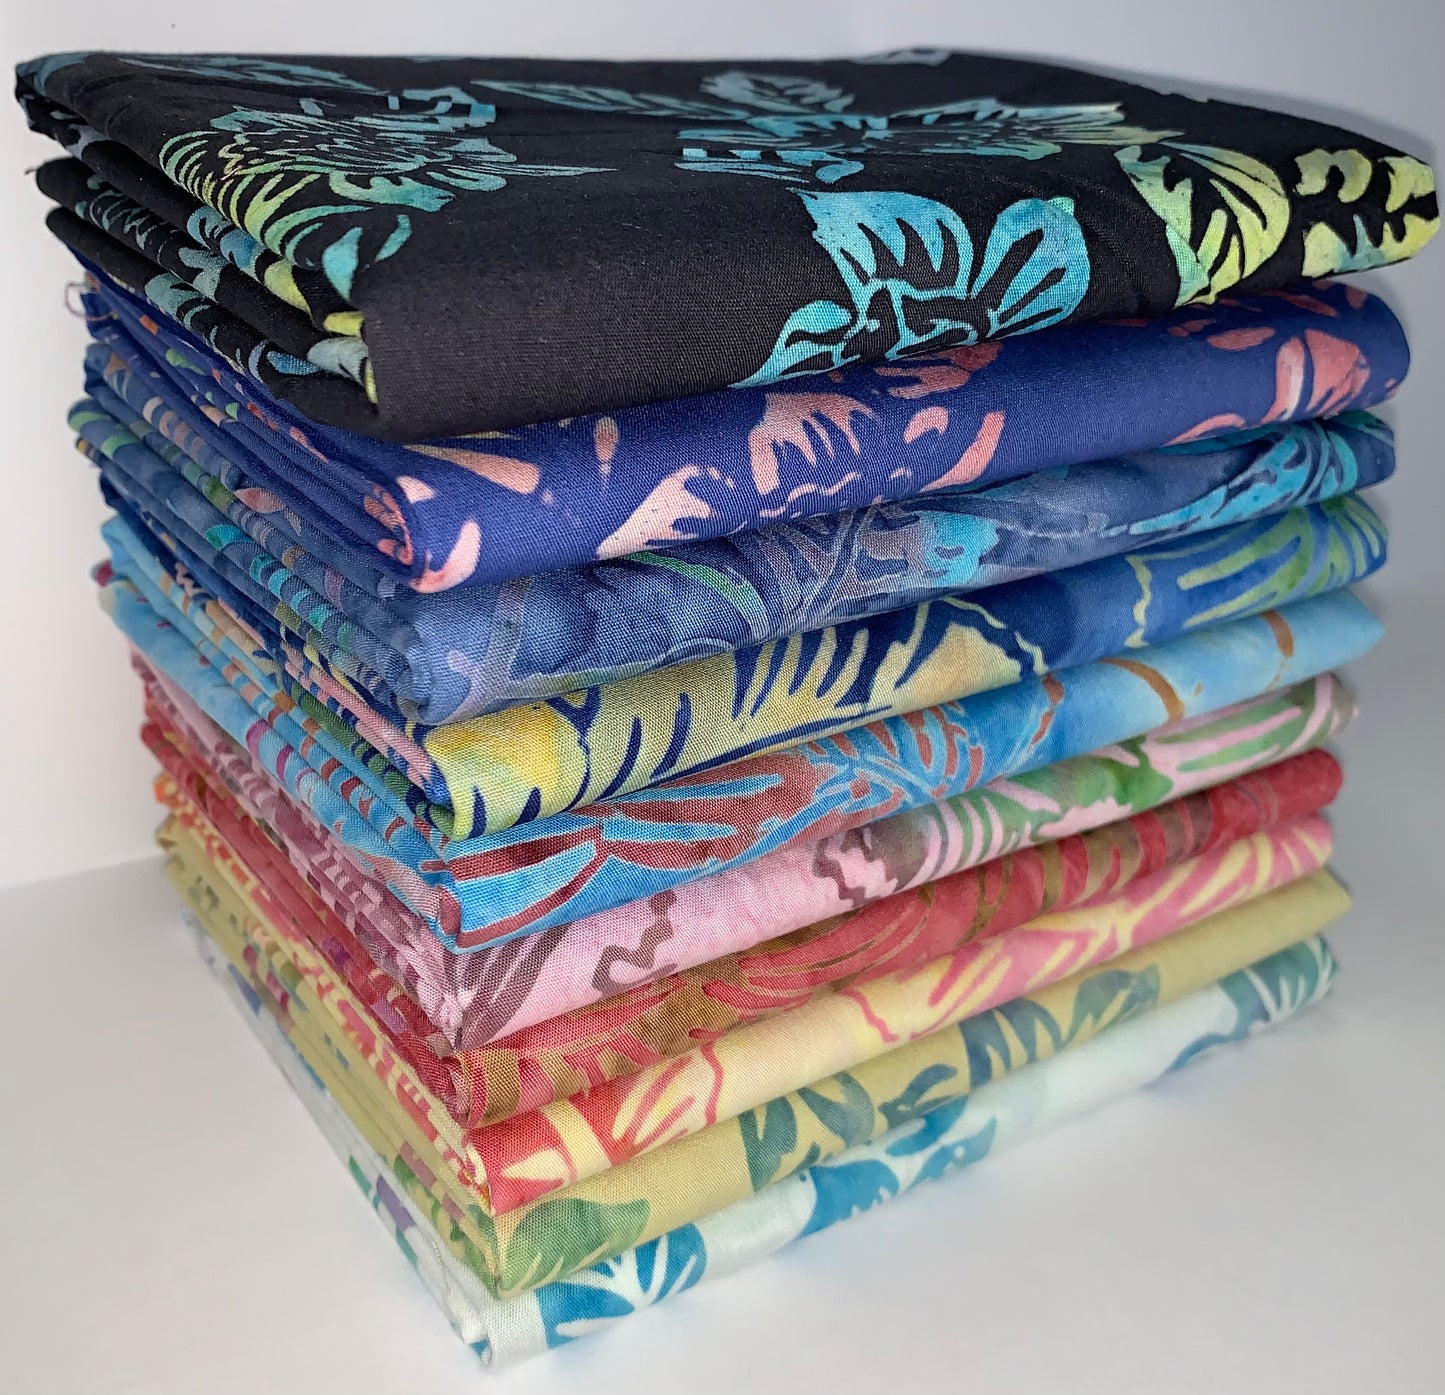 Benartex Bali Batik "Hawaii 2" Half-yard Bundle - 10 Fabrics, 5 Total Yards